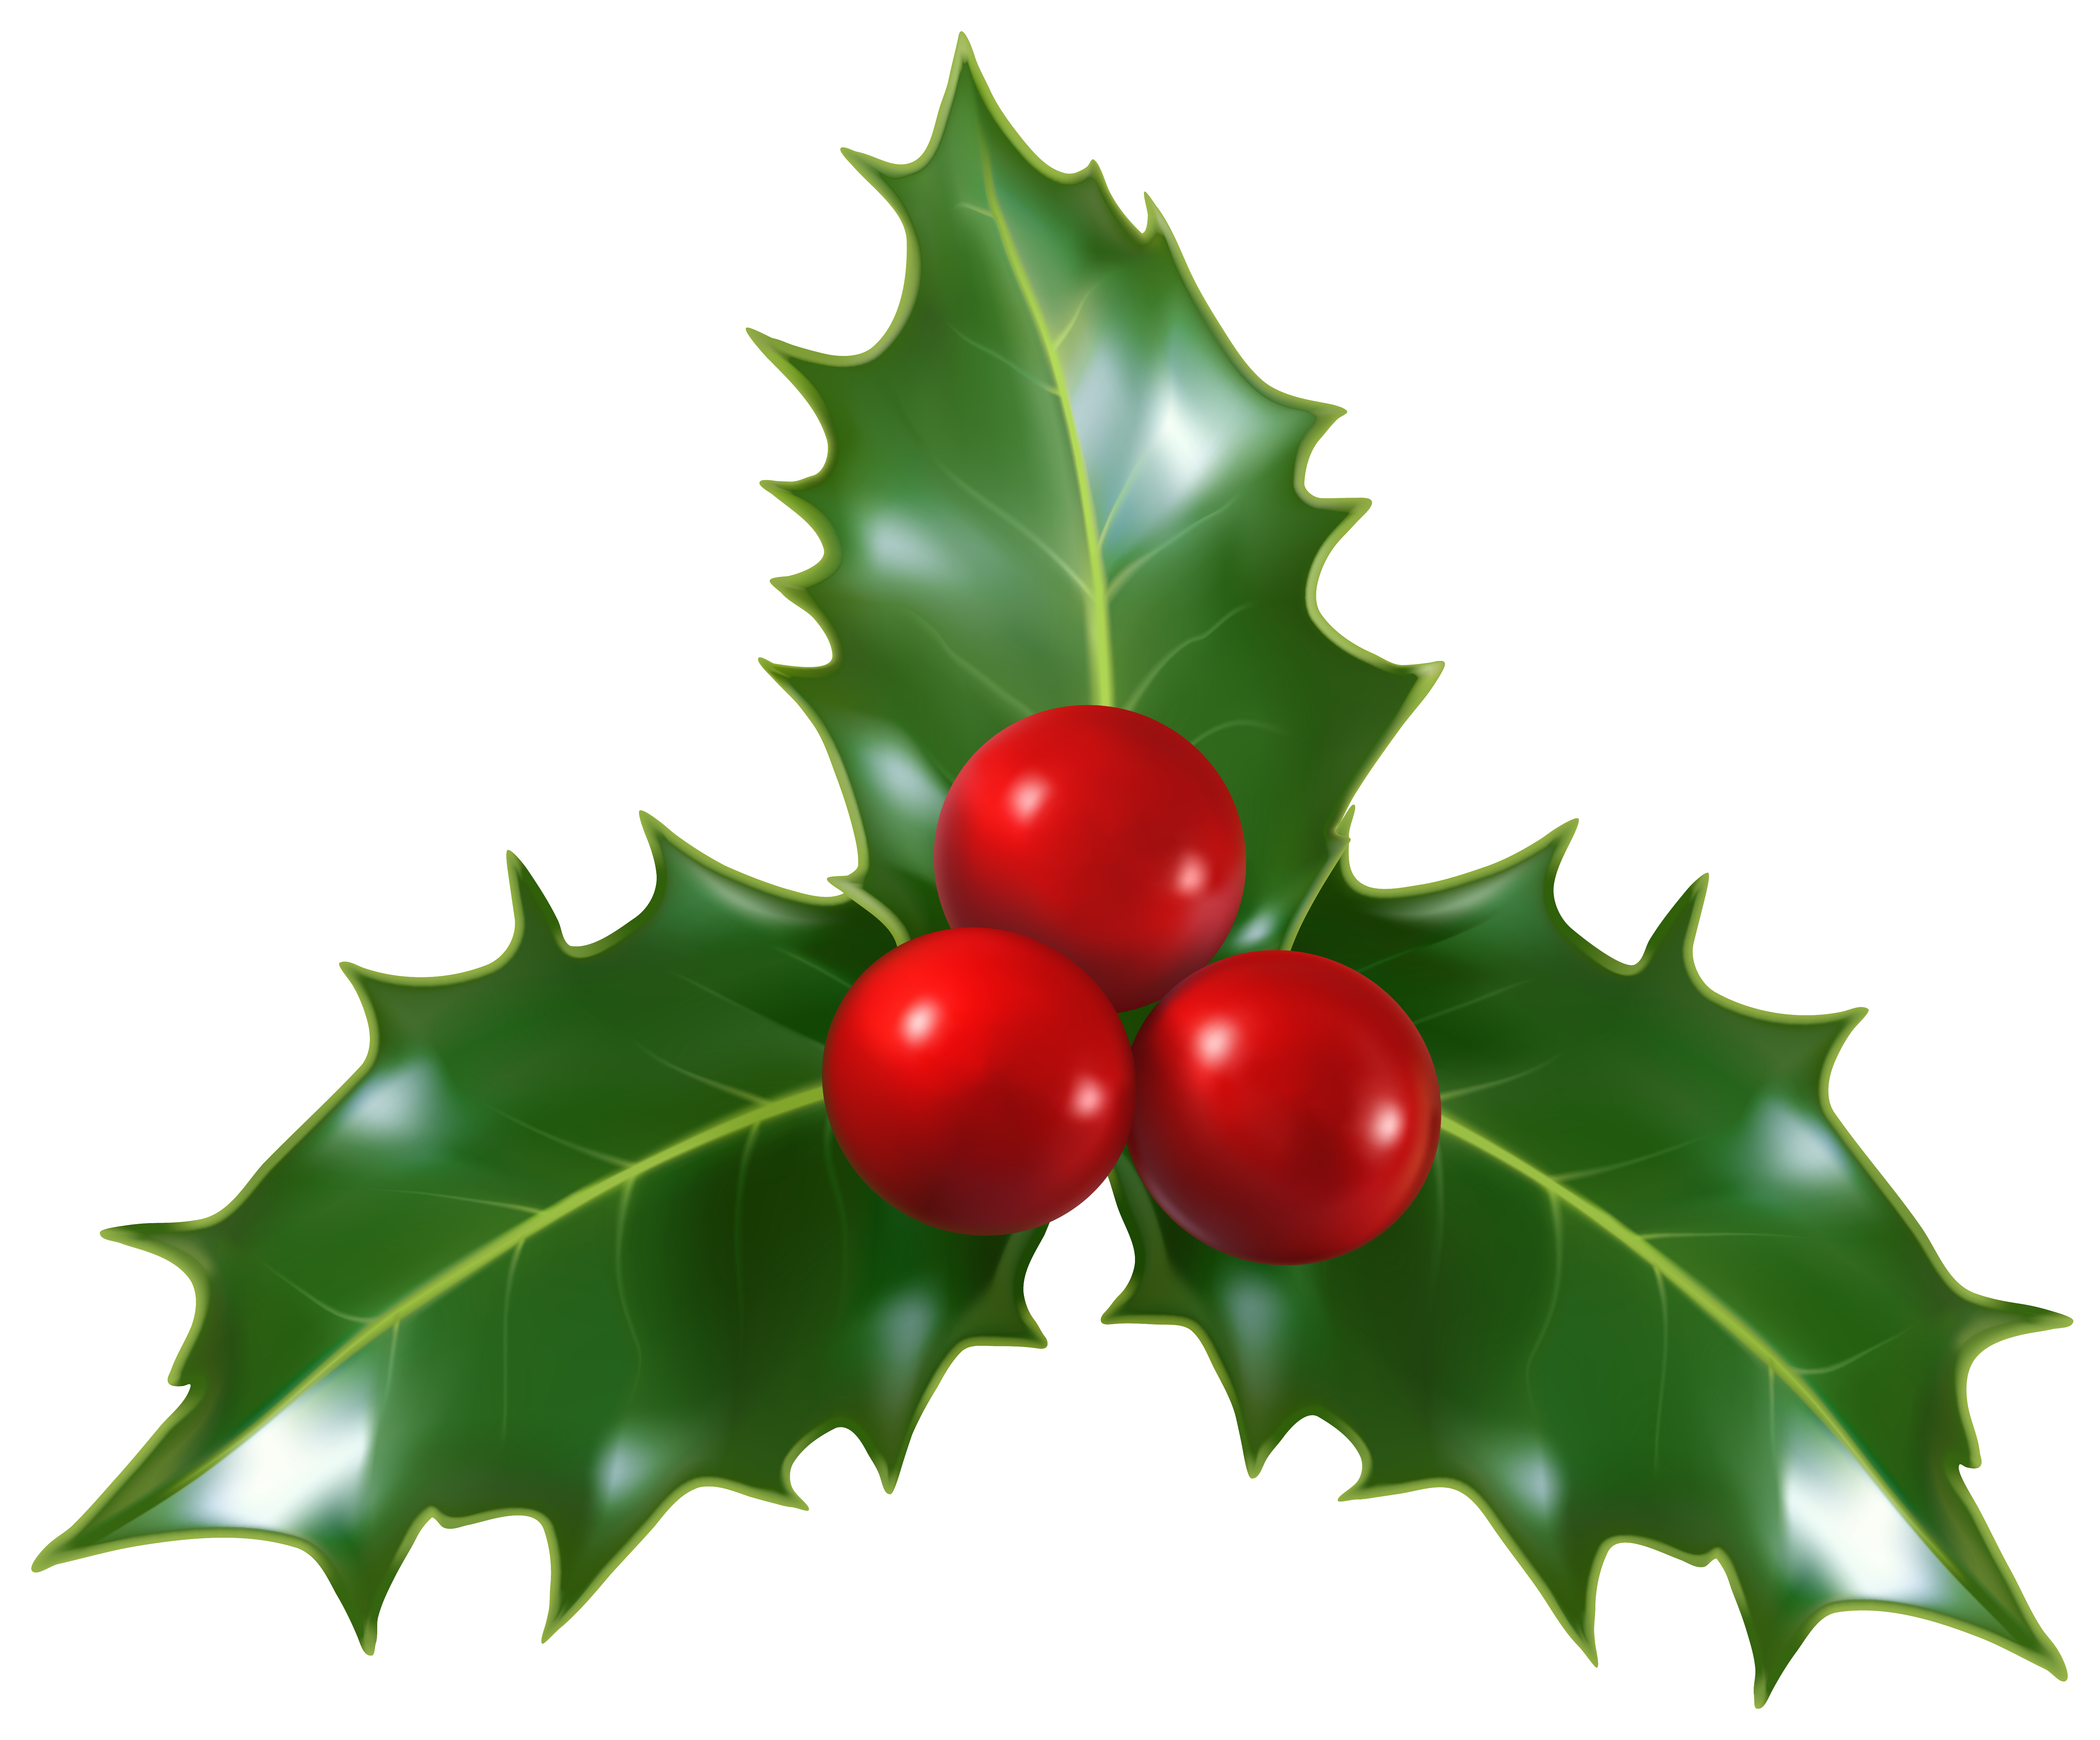 Christmas Holly Mistletoe PNG Clip-Art Image | Gallery Yopriceville ...